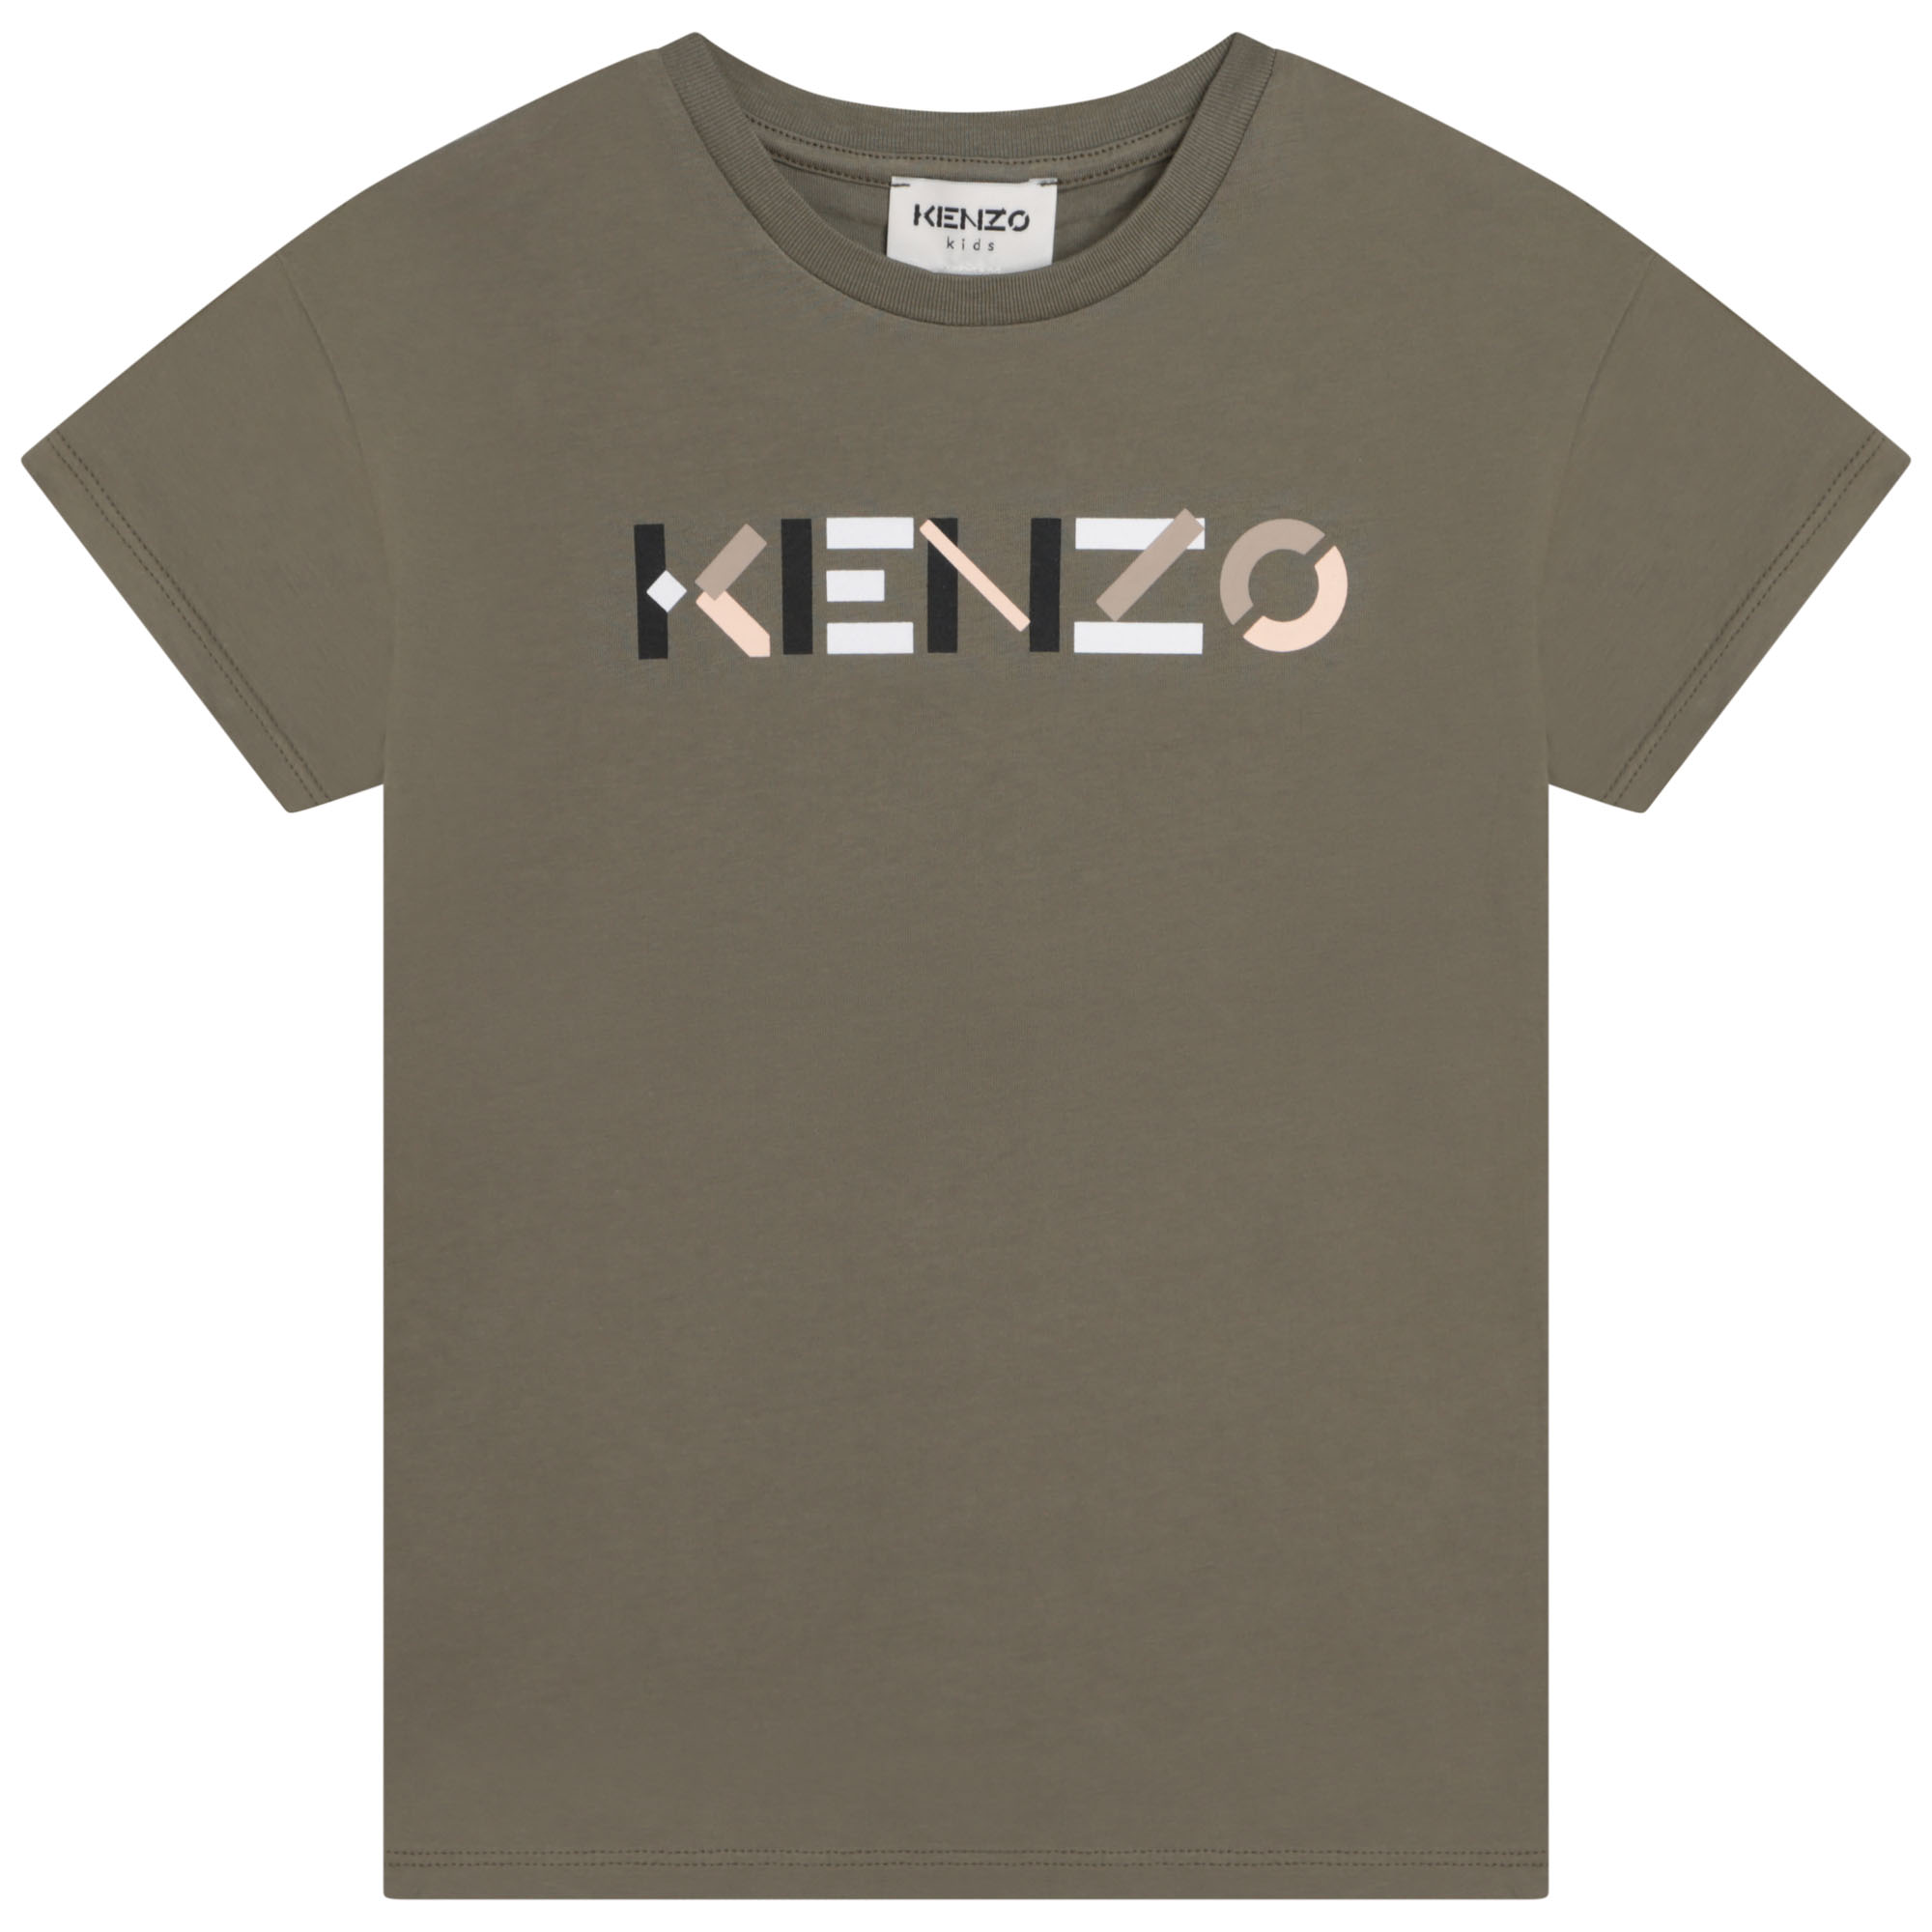 Tee shirt KENZO KIDS Per RAGAZZO